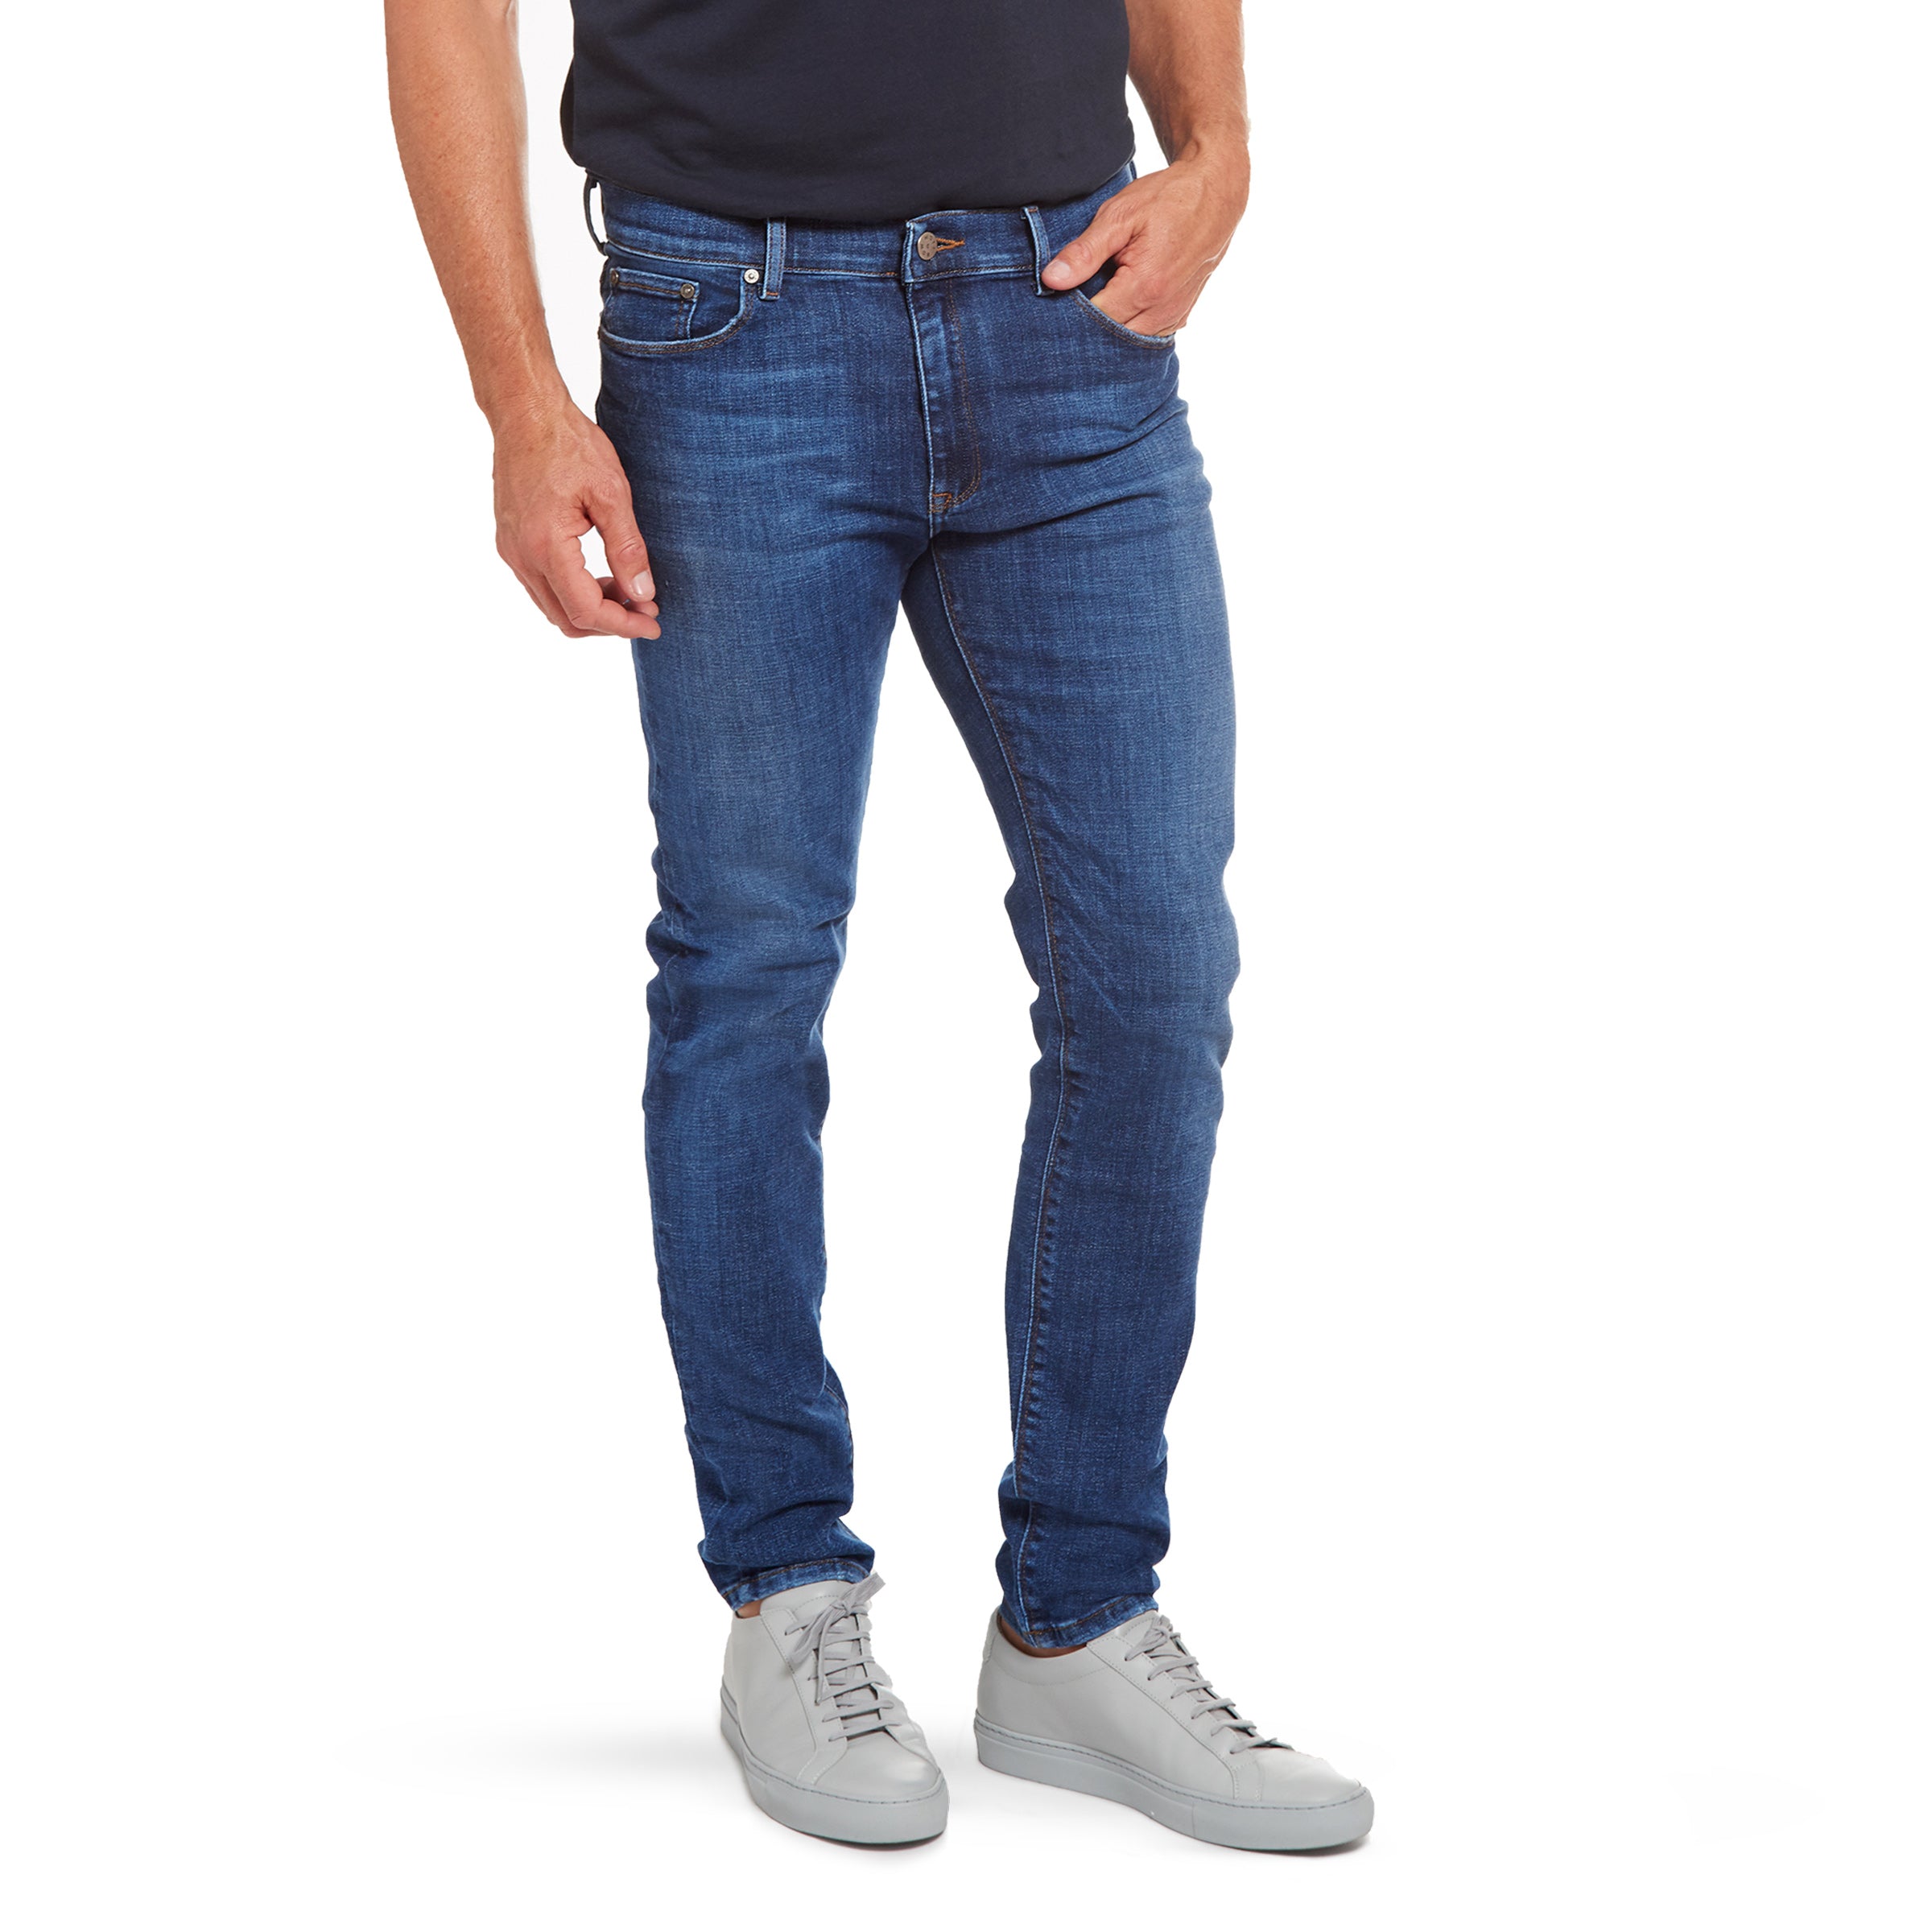 Men wearing Light/Medium Blue Skinny Wooster Jeans